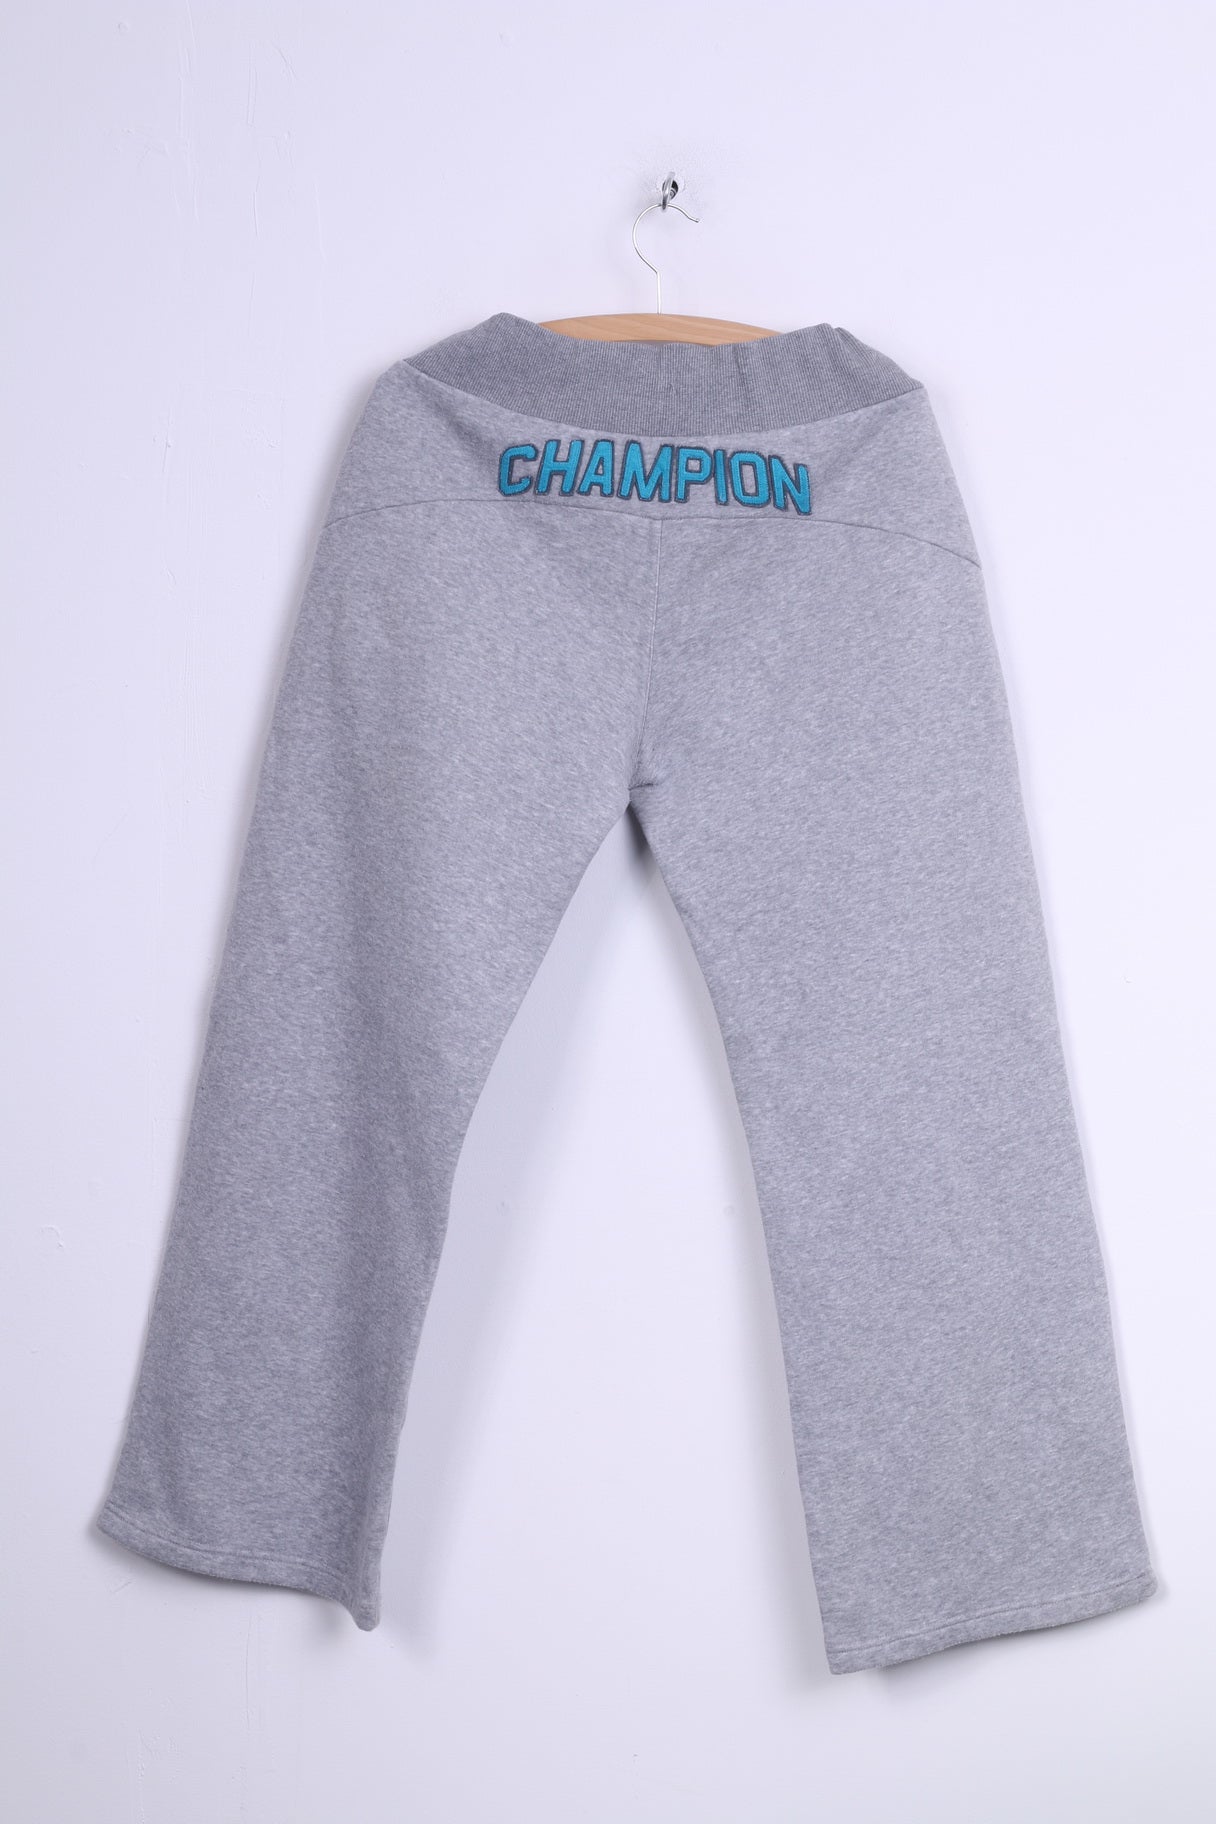 Champion Womens 16 XL Sweatpants Grey Cotton Sport